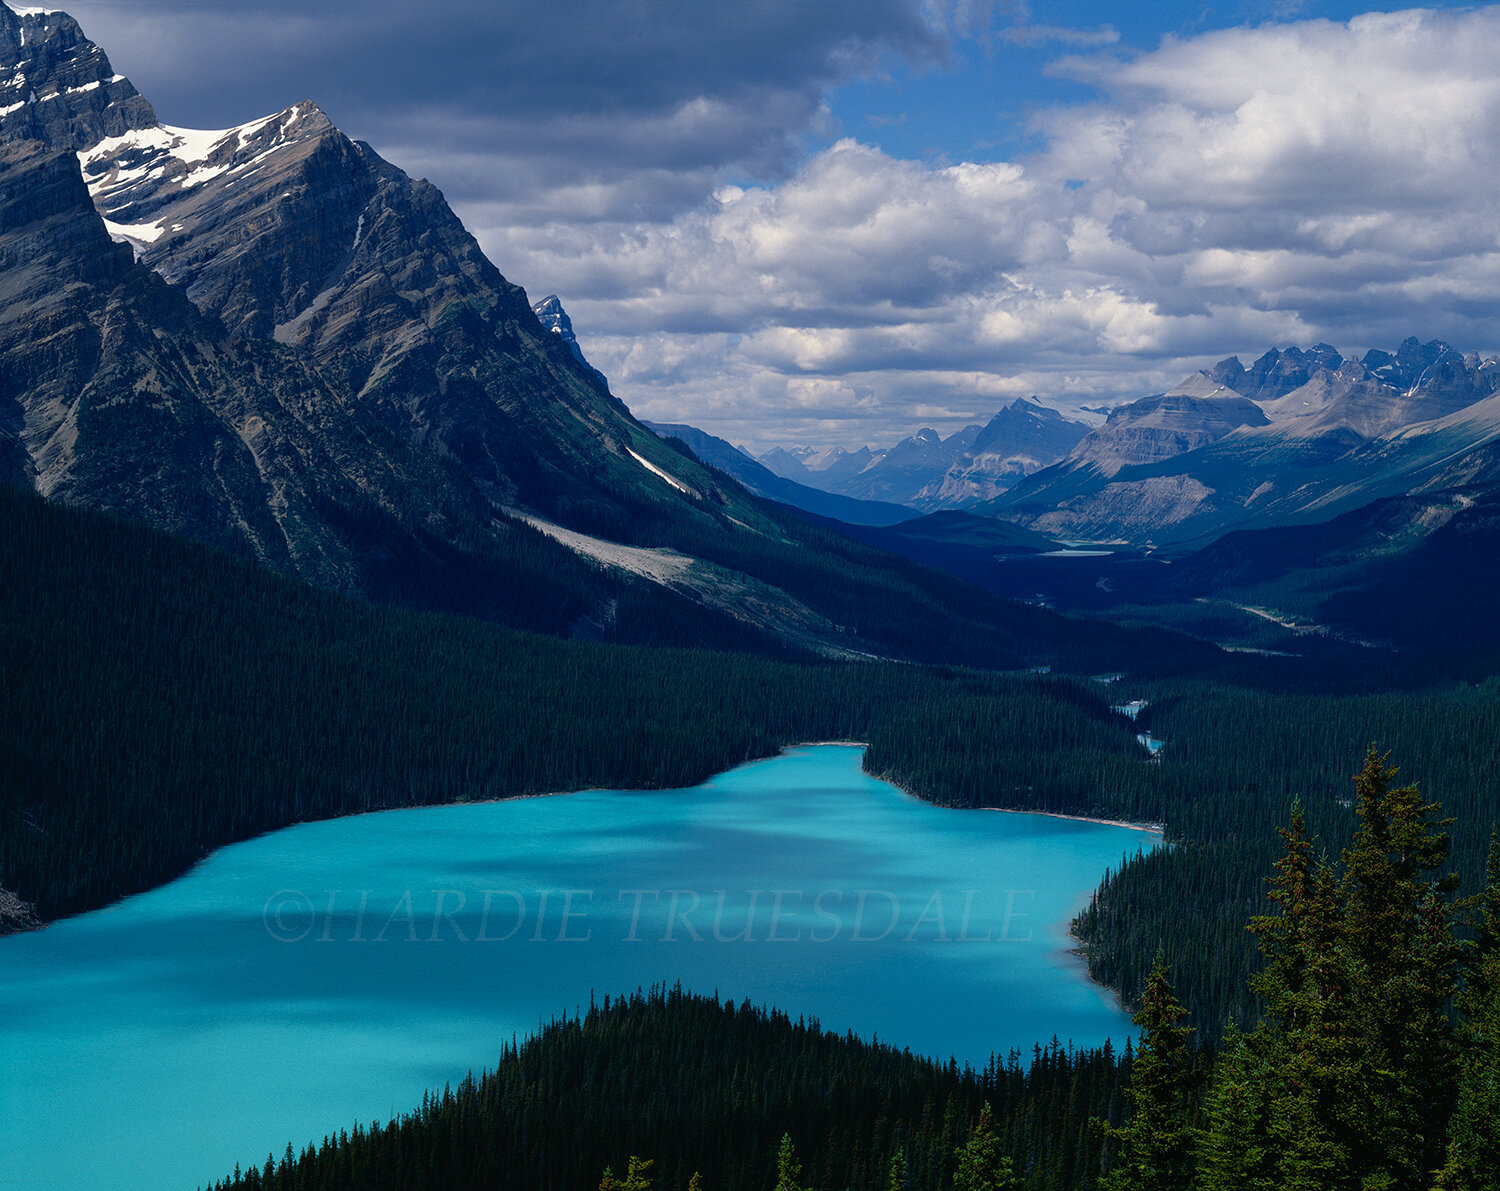 CR#015 "Peyto Lake, Banff National Park, Alberta